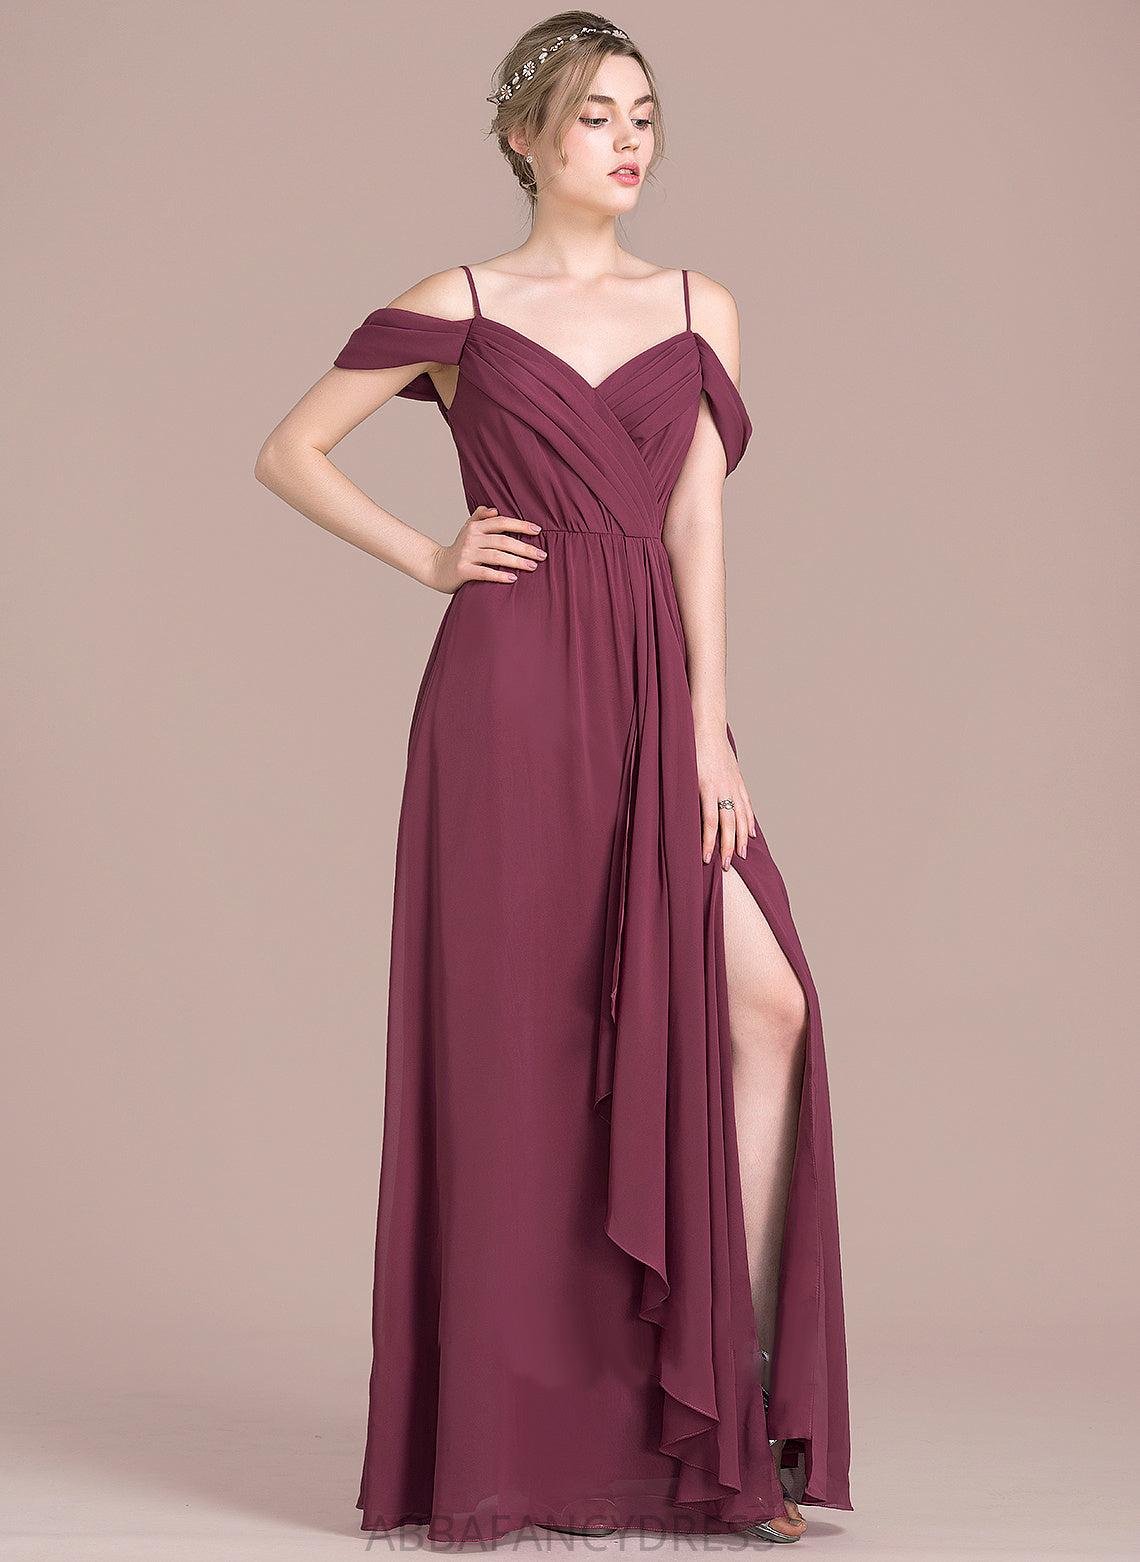 V-neck Skye Prom Dresses Ruffles Bow(s) Floor-Length A-Line Cascading Split With Chiffon Front